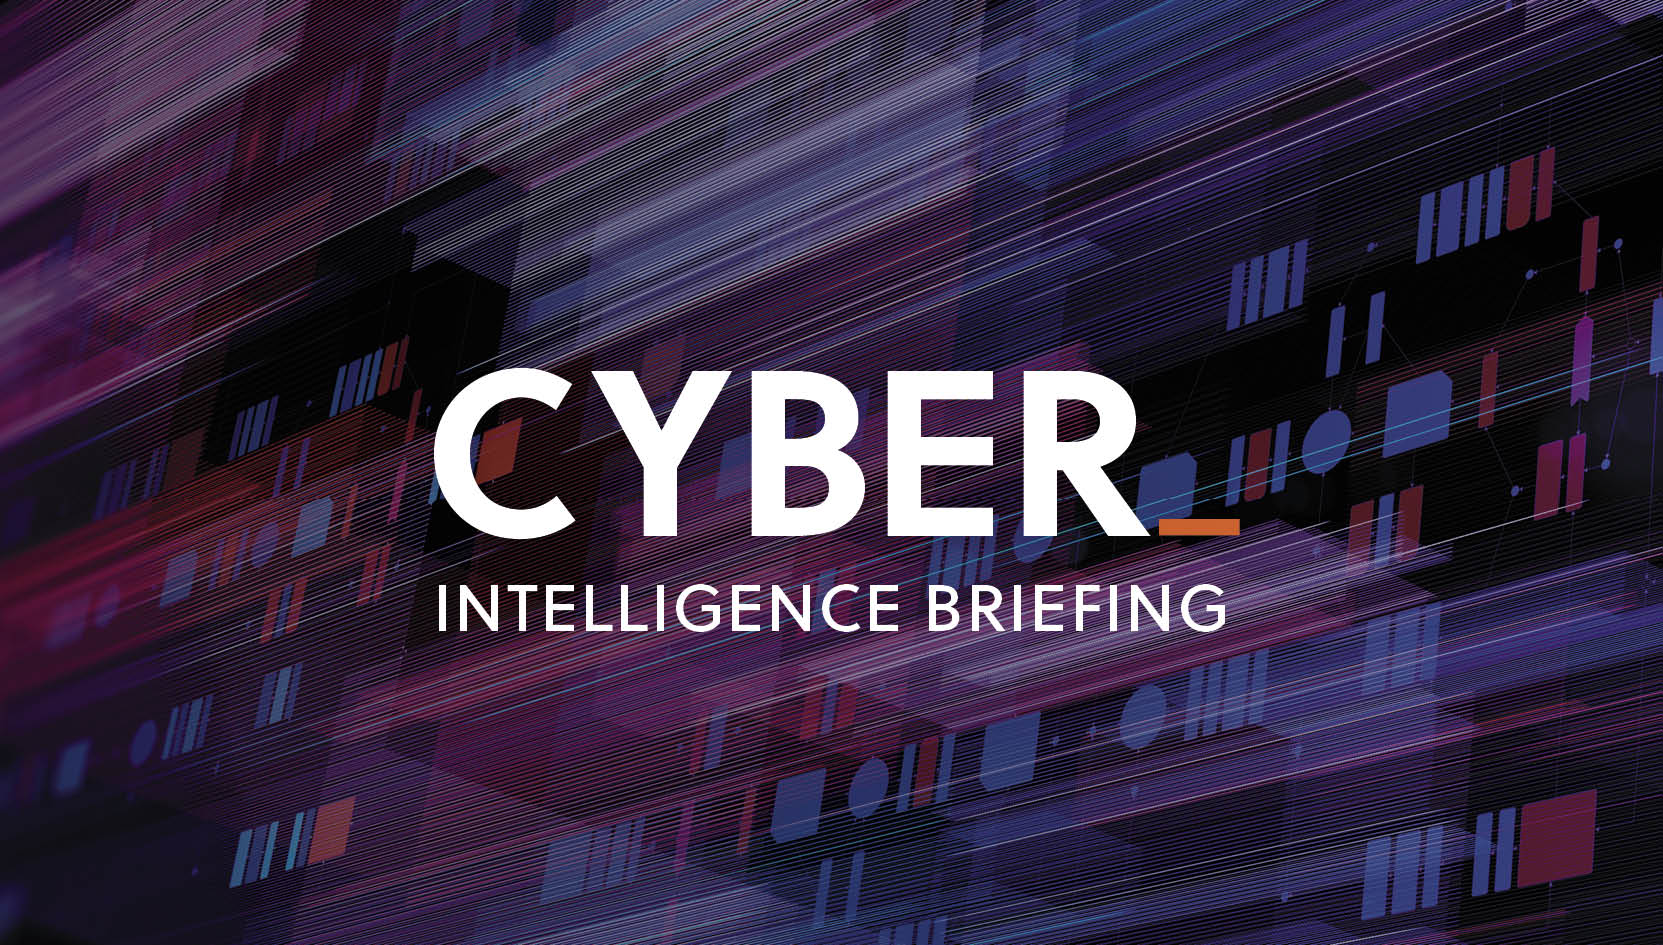 Global Cyber Intelligence News